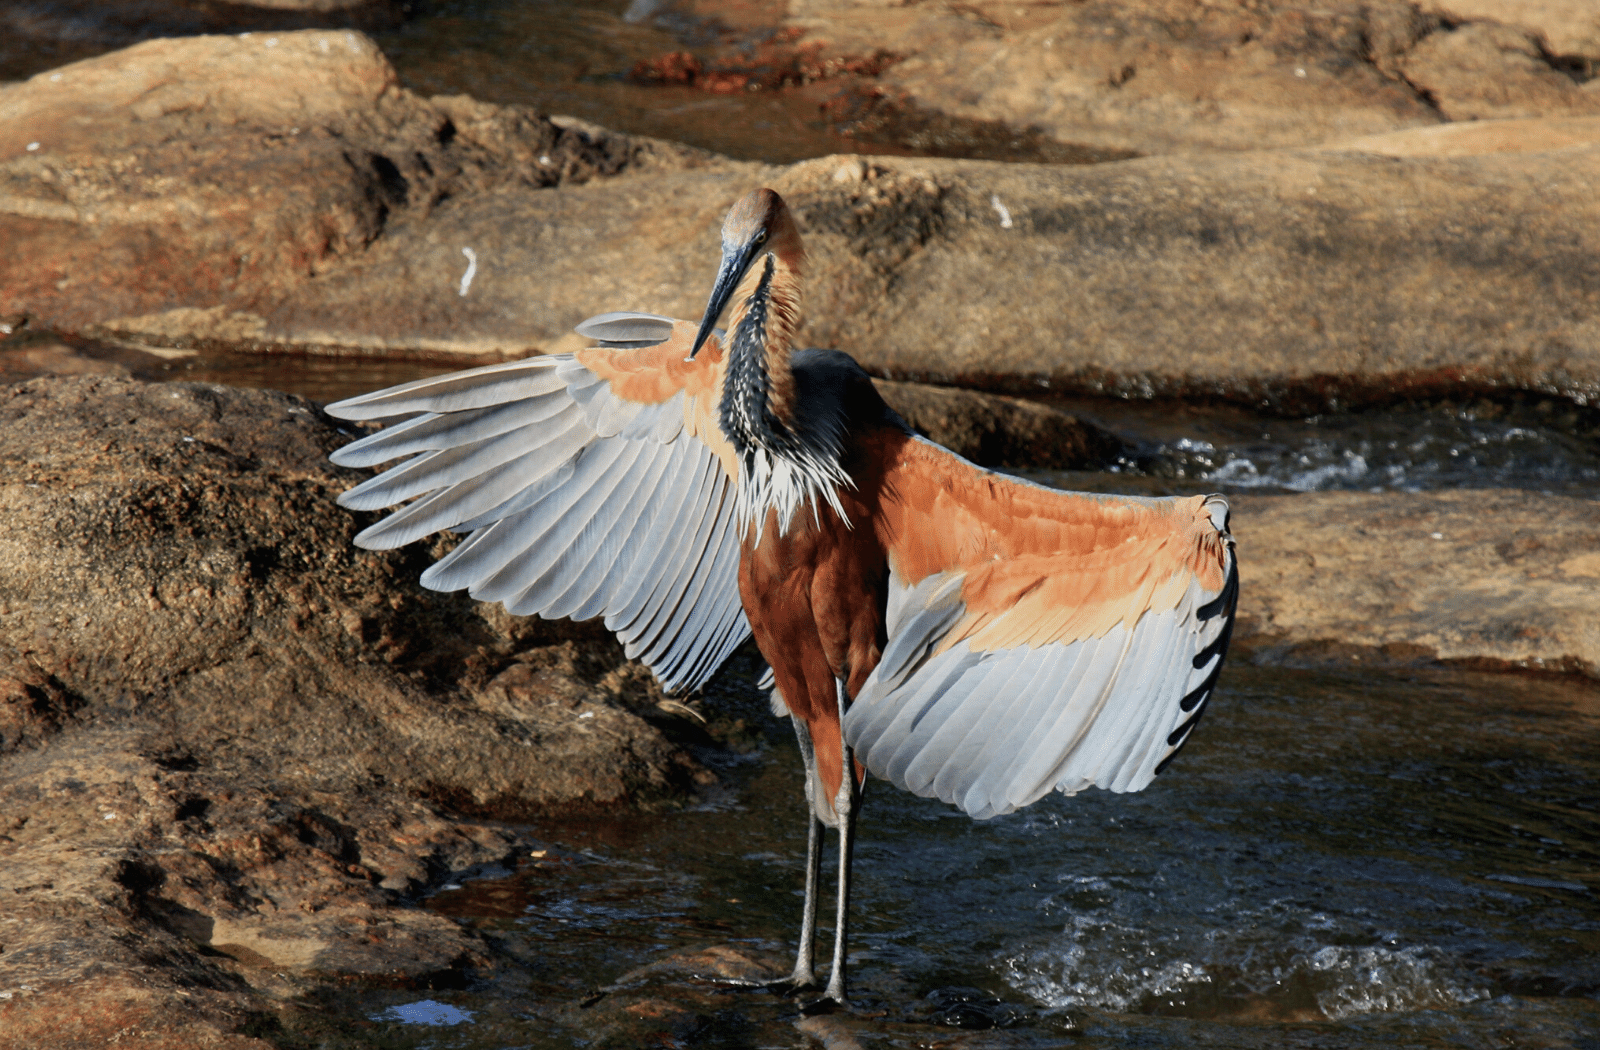 Goliath heron in Zimbabwe